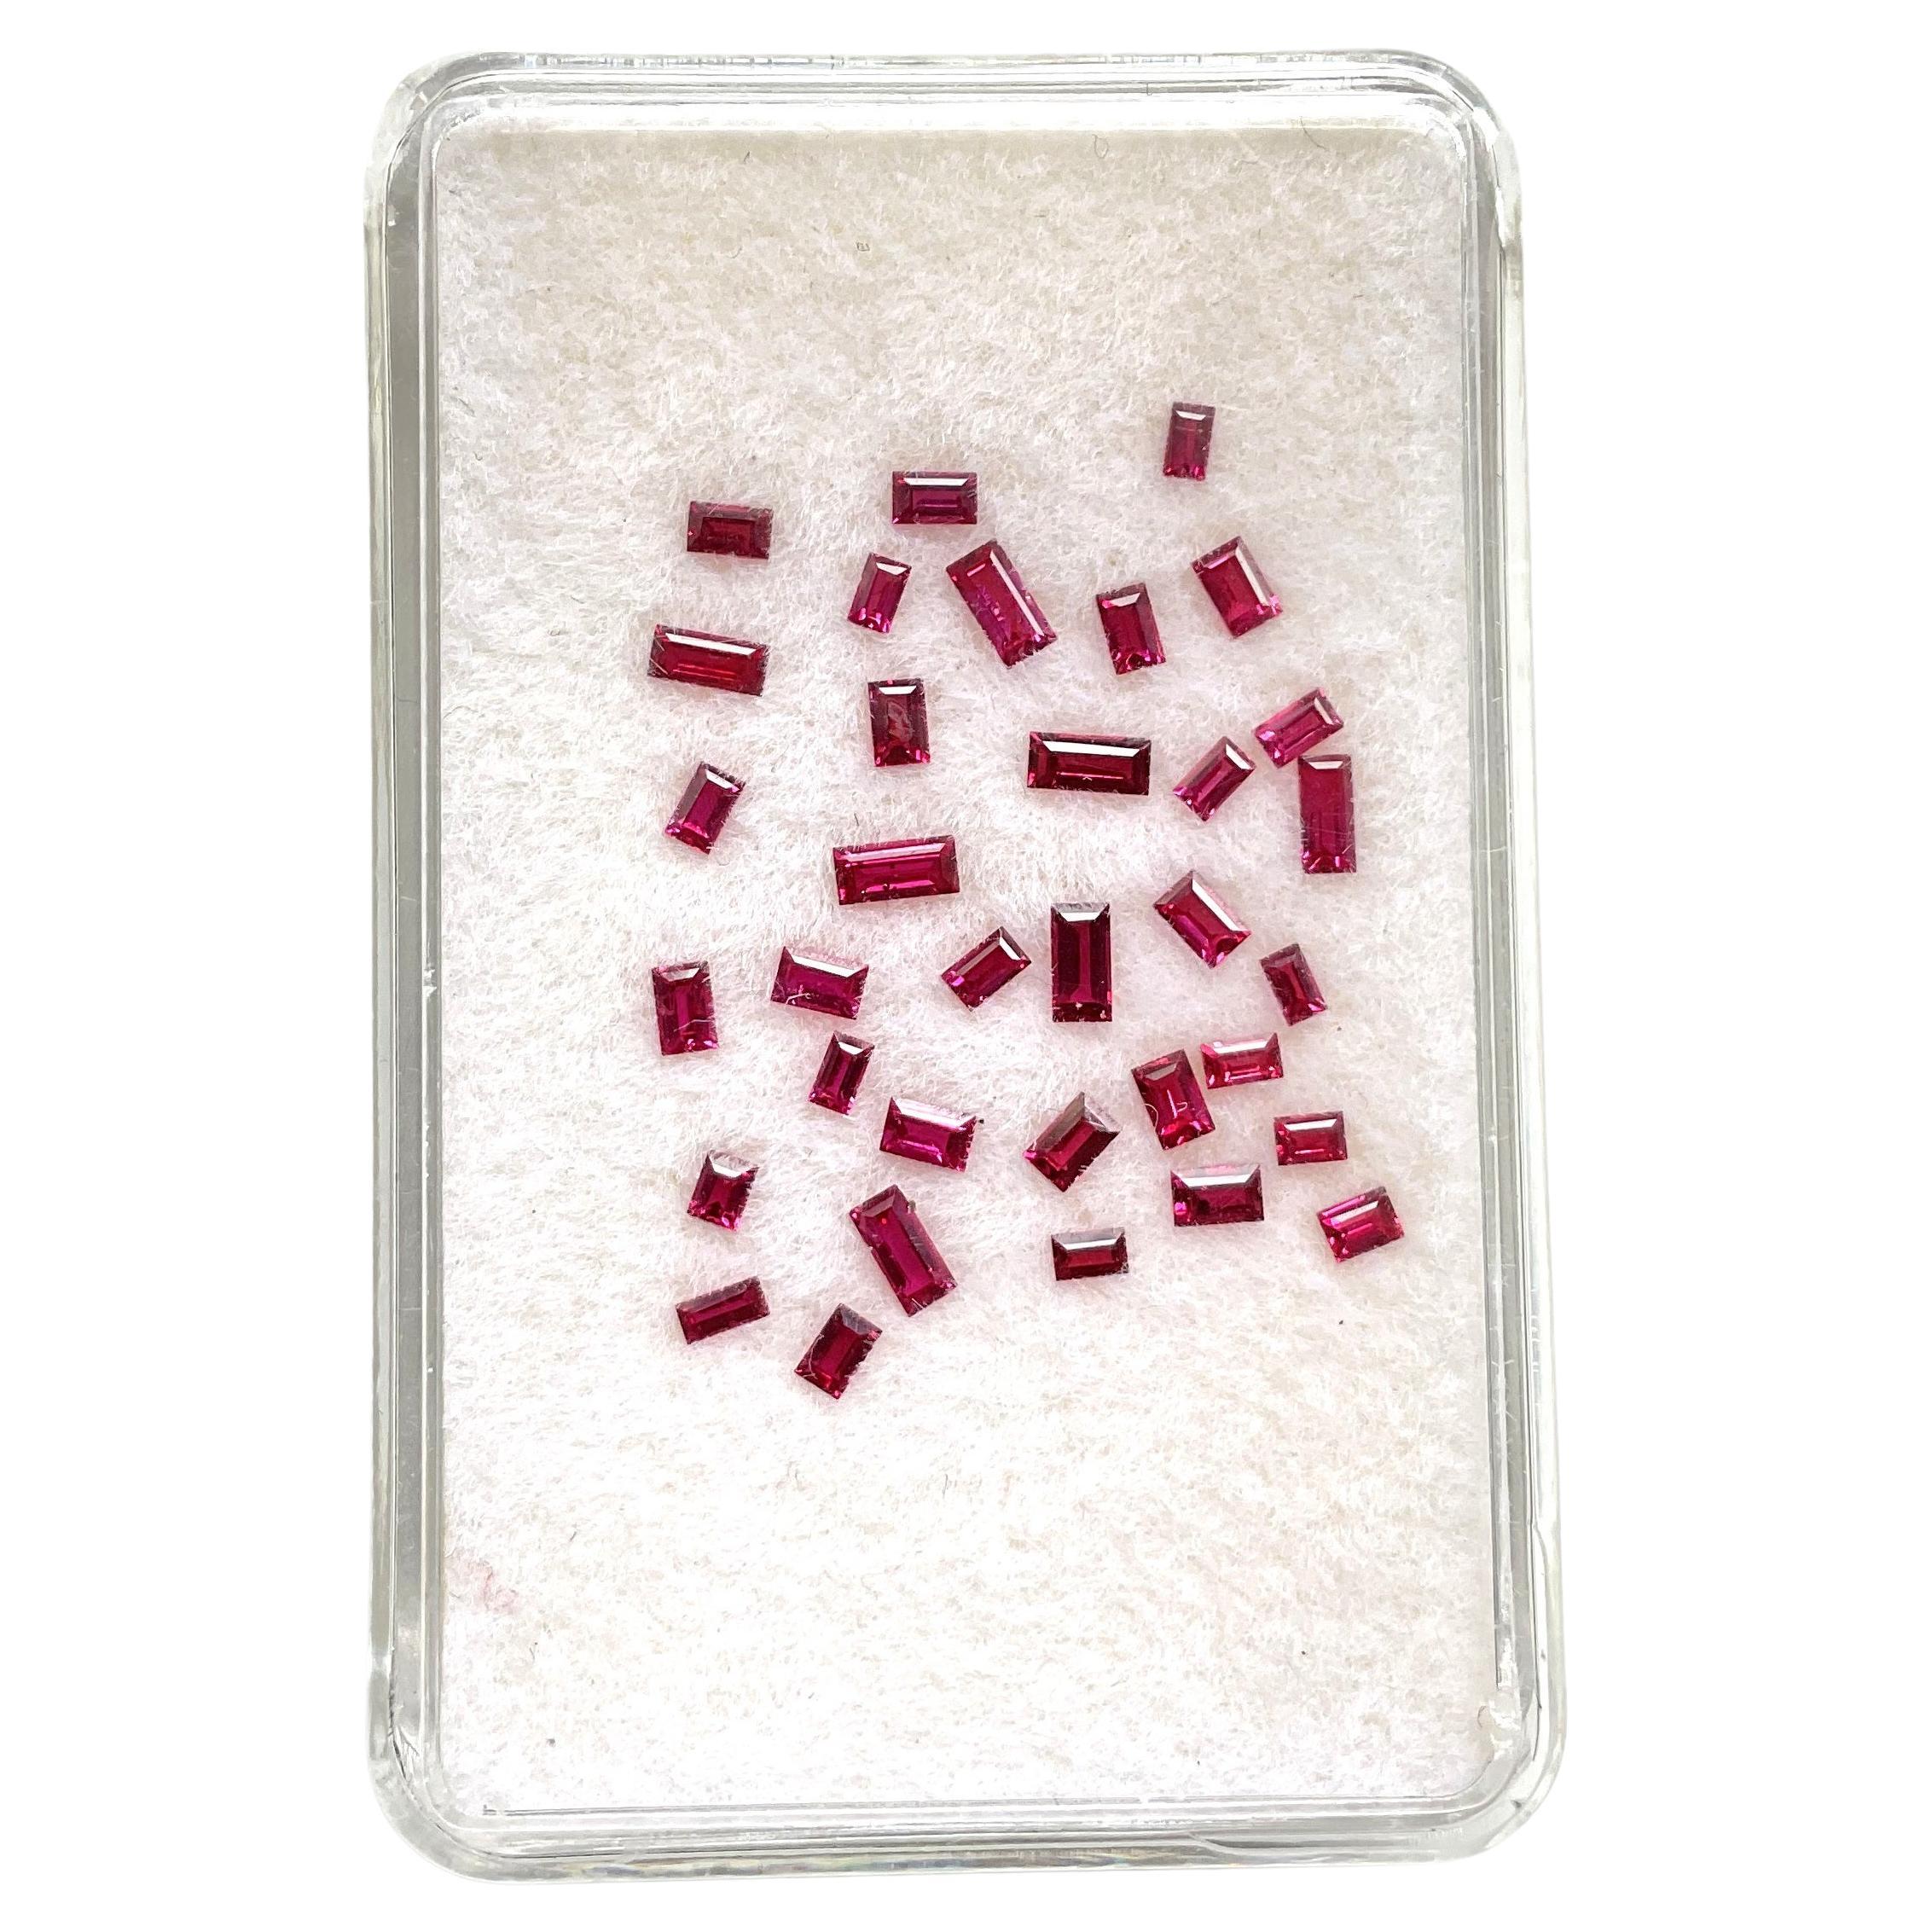 2.16 Carats Mozambique Ruby Top Quality Baguette Cut stone No Heat Natural Gem For Sale